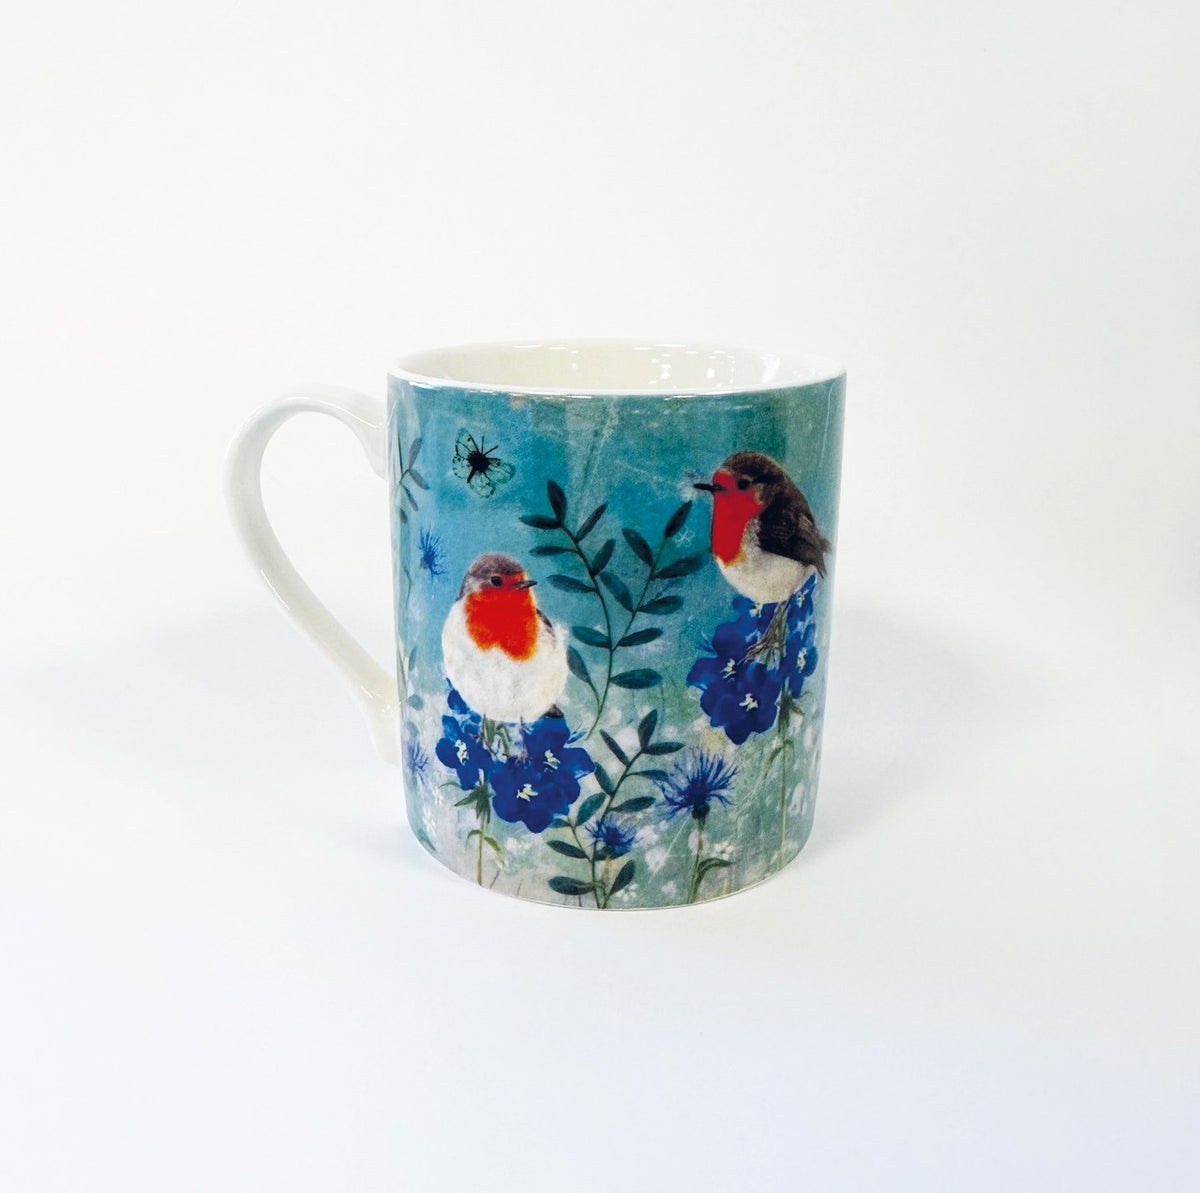 Enchanted robin mug